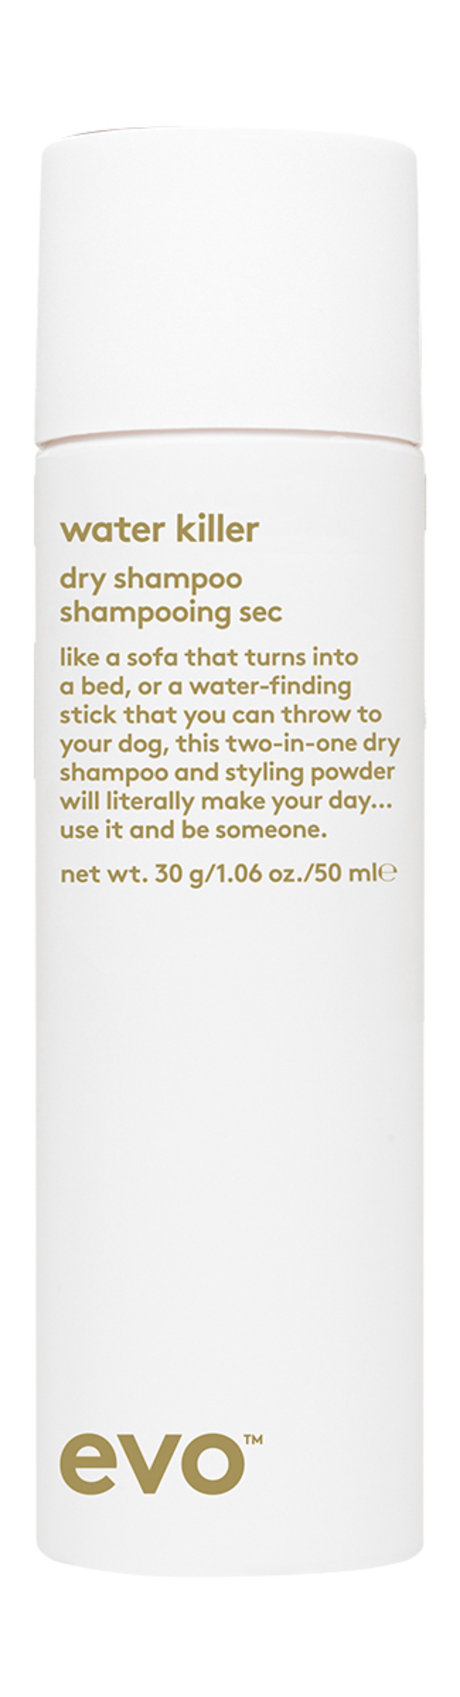 evo water killer dry shampoo travel size